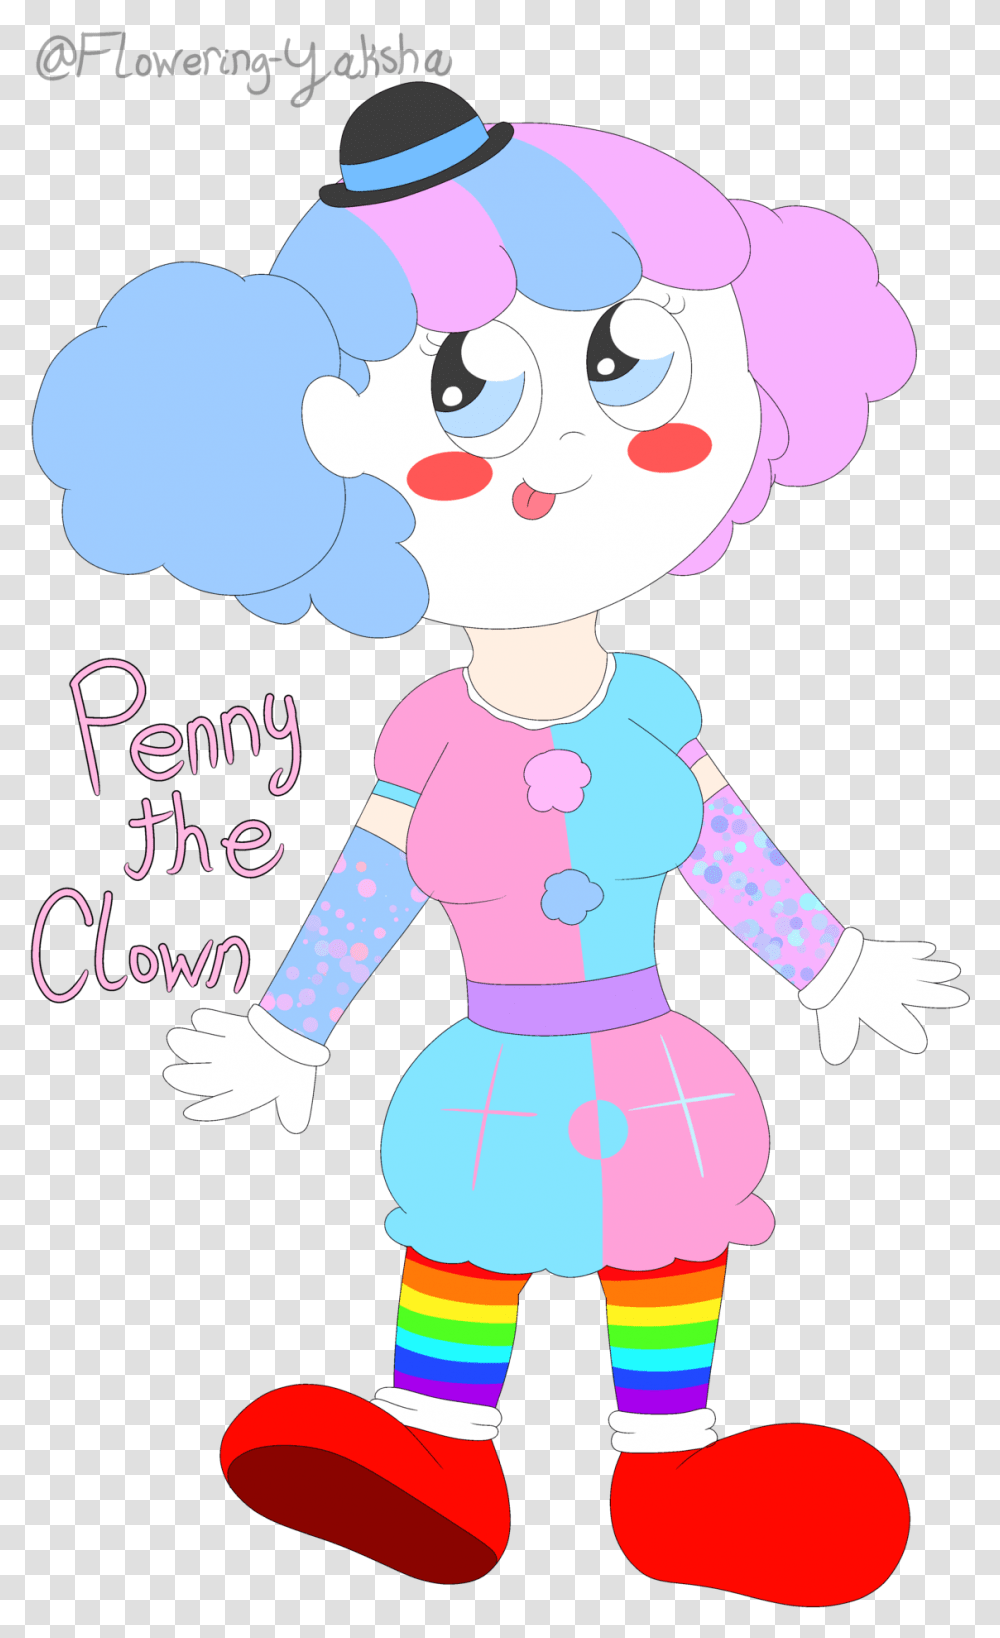 Clown Oc Original Character Penny Penny The Clown Cute Cartoon, Person, Poster, Advertisement Transparent Png